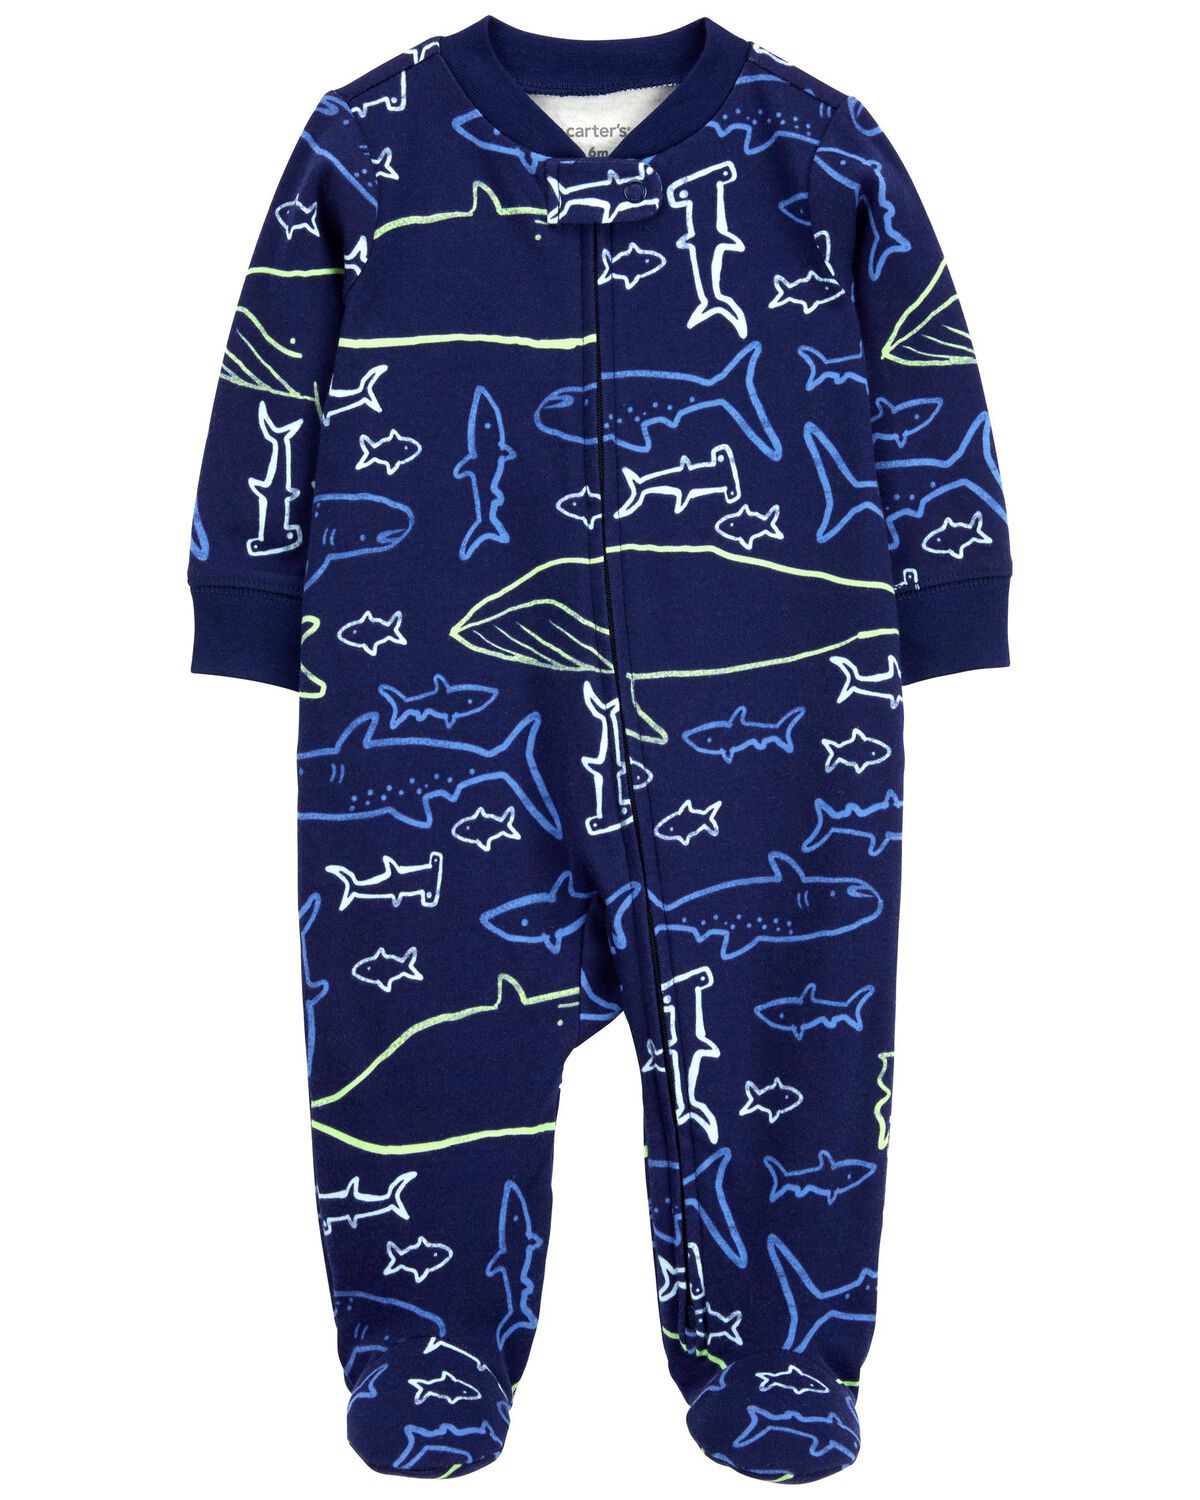 Baby 2-Way Zip Whale Cotton Sleep & Play Pajamas